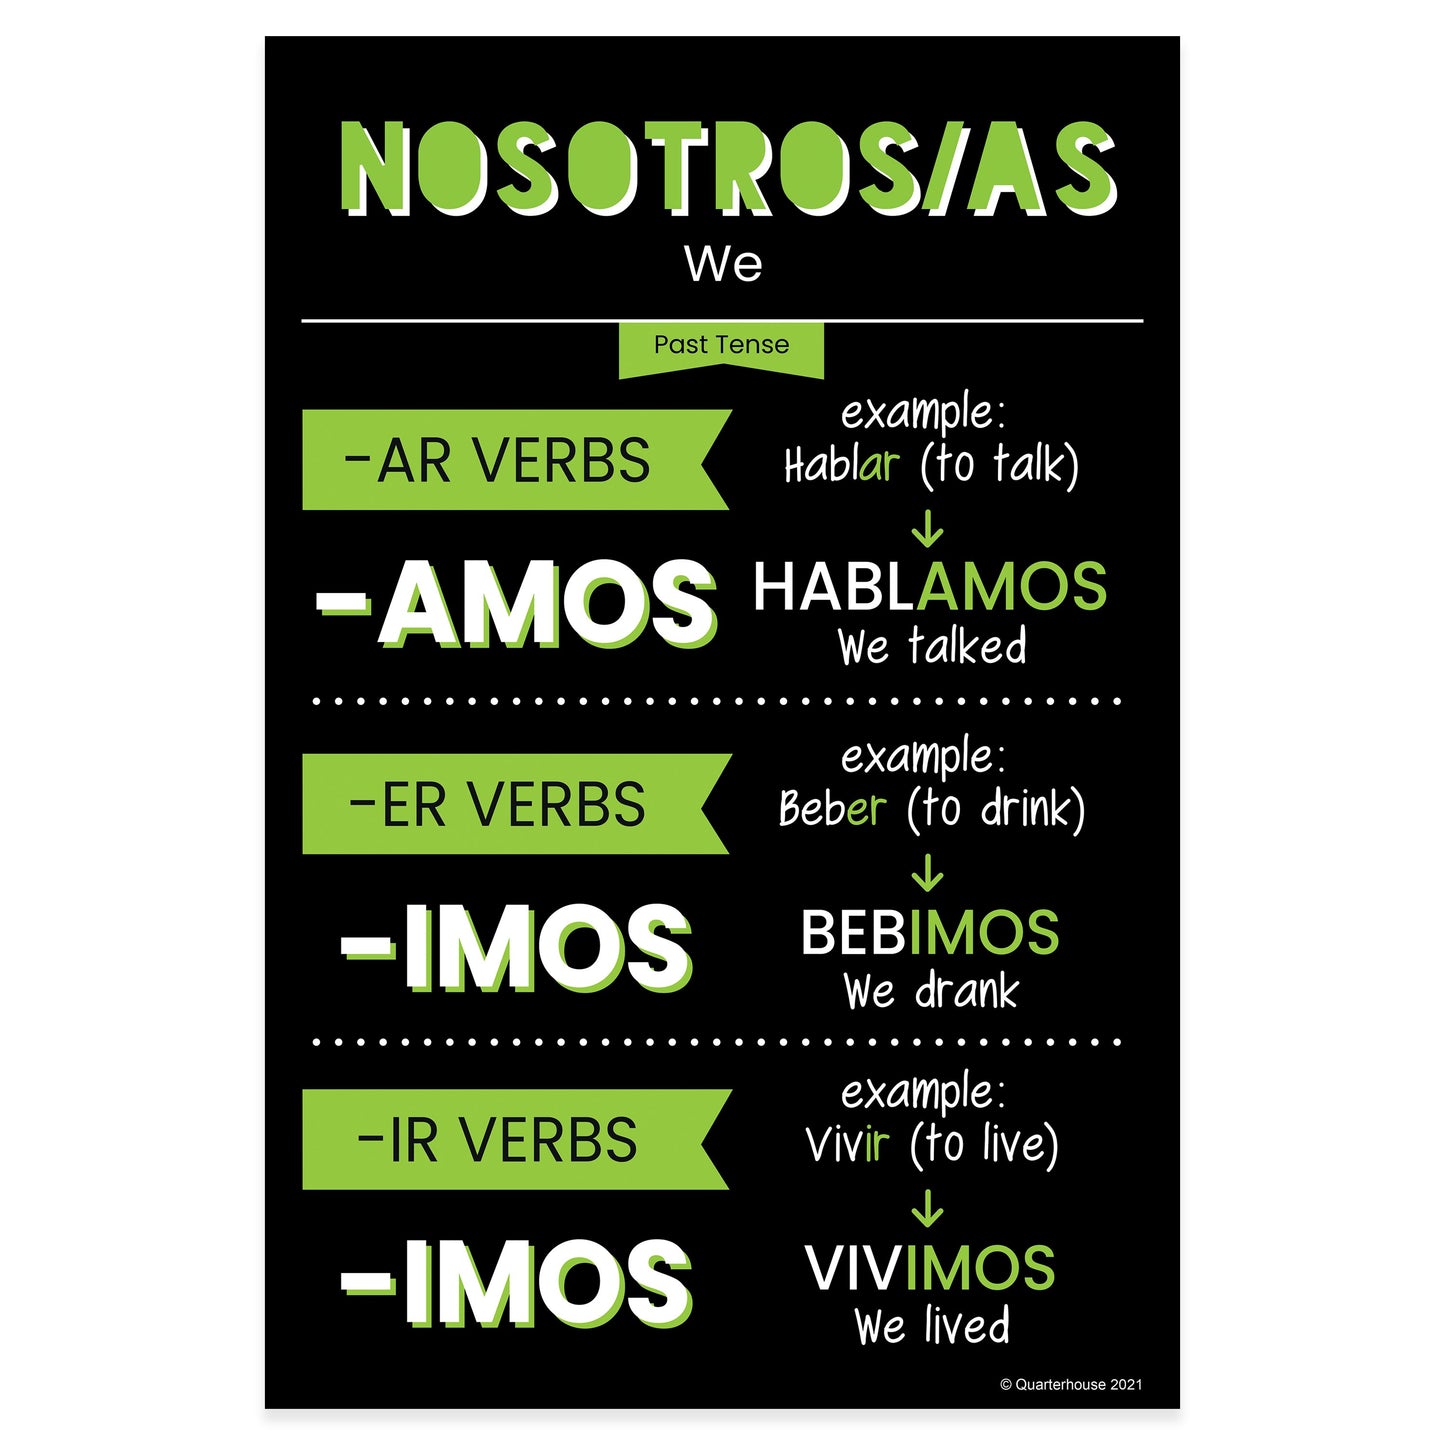 Quarterhouse Nosotros - Past Tense Spanish Verb Conjugation (Dark-Themed) Poster, Spanish and ESL Classroom Materials for Teachers